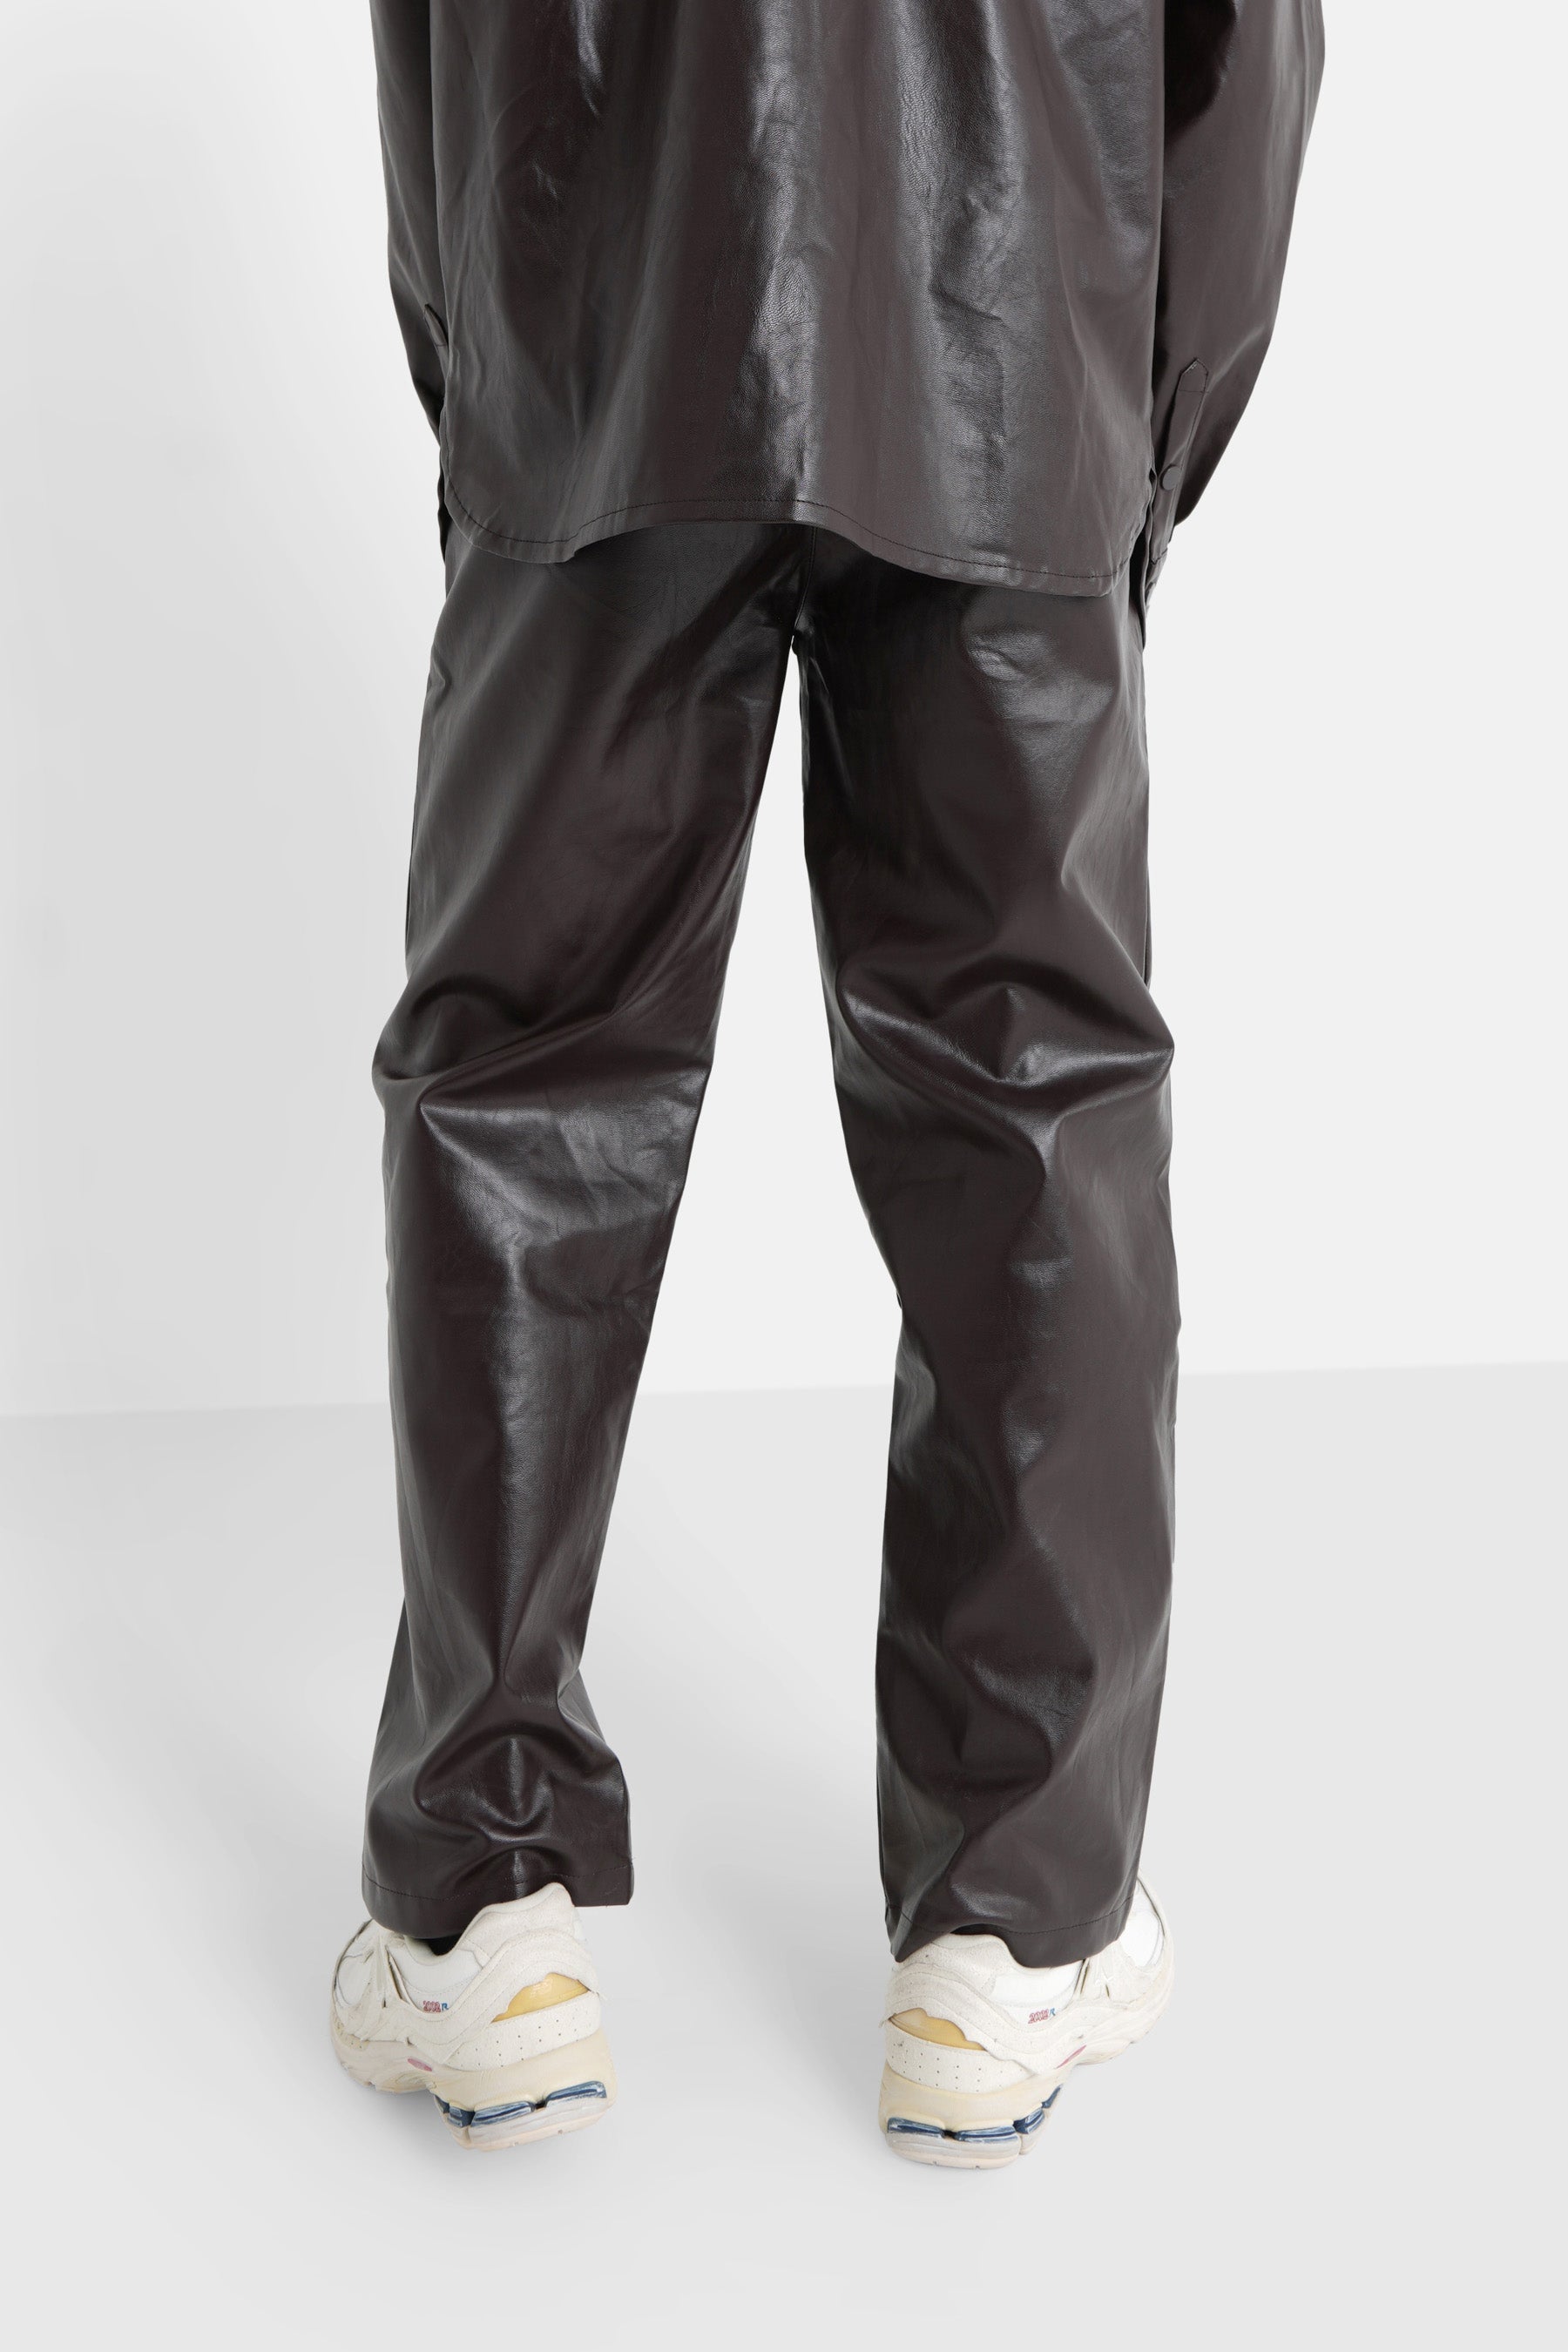 Sixth June - Pantalon droit simili cuir Marron foncé